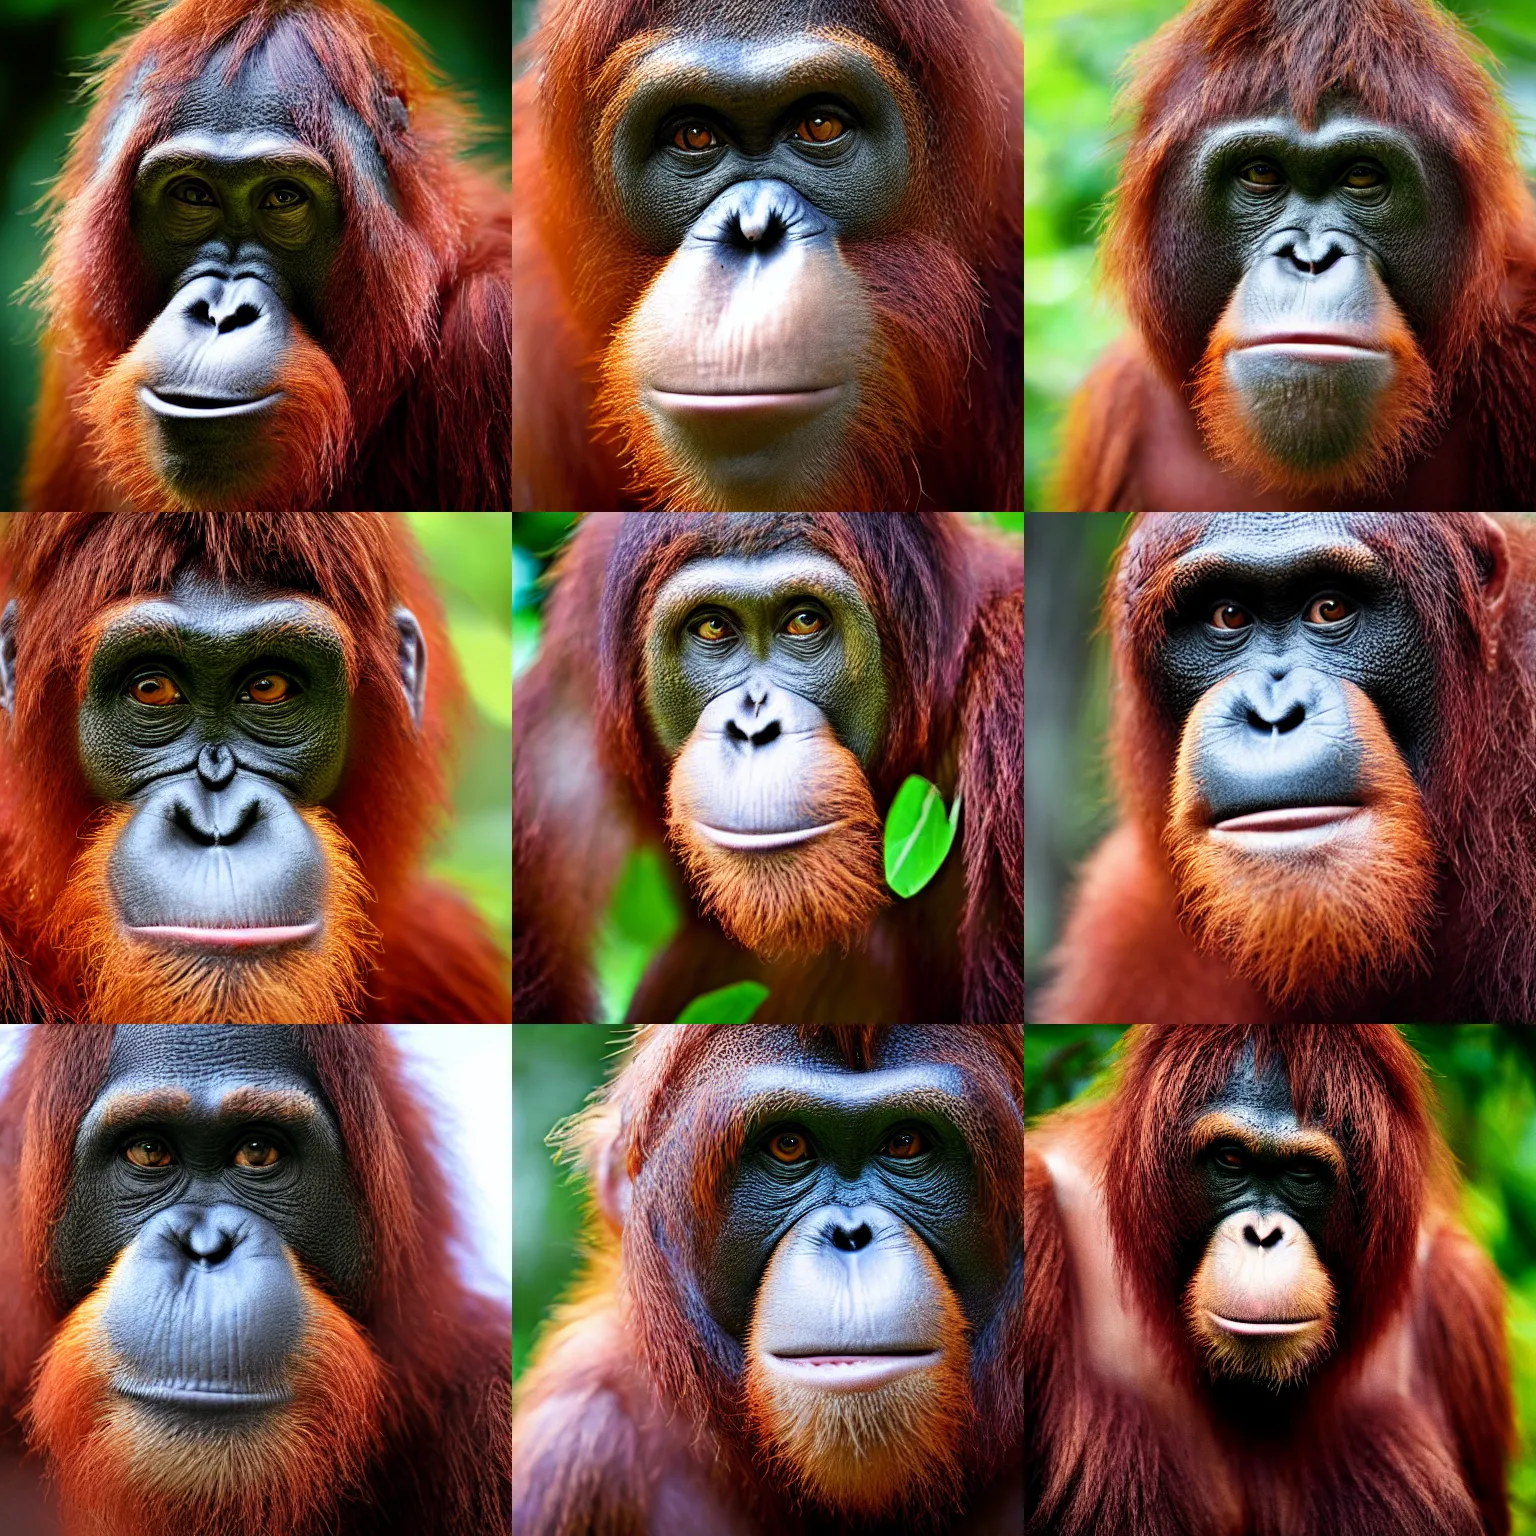 Prompt: portrait photo of a Roman orangutan